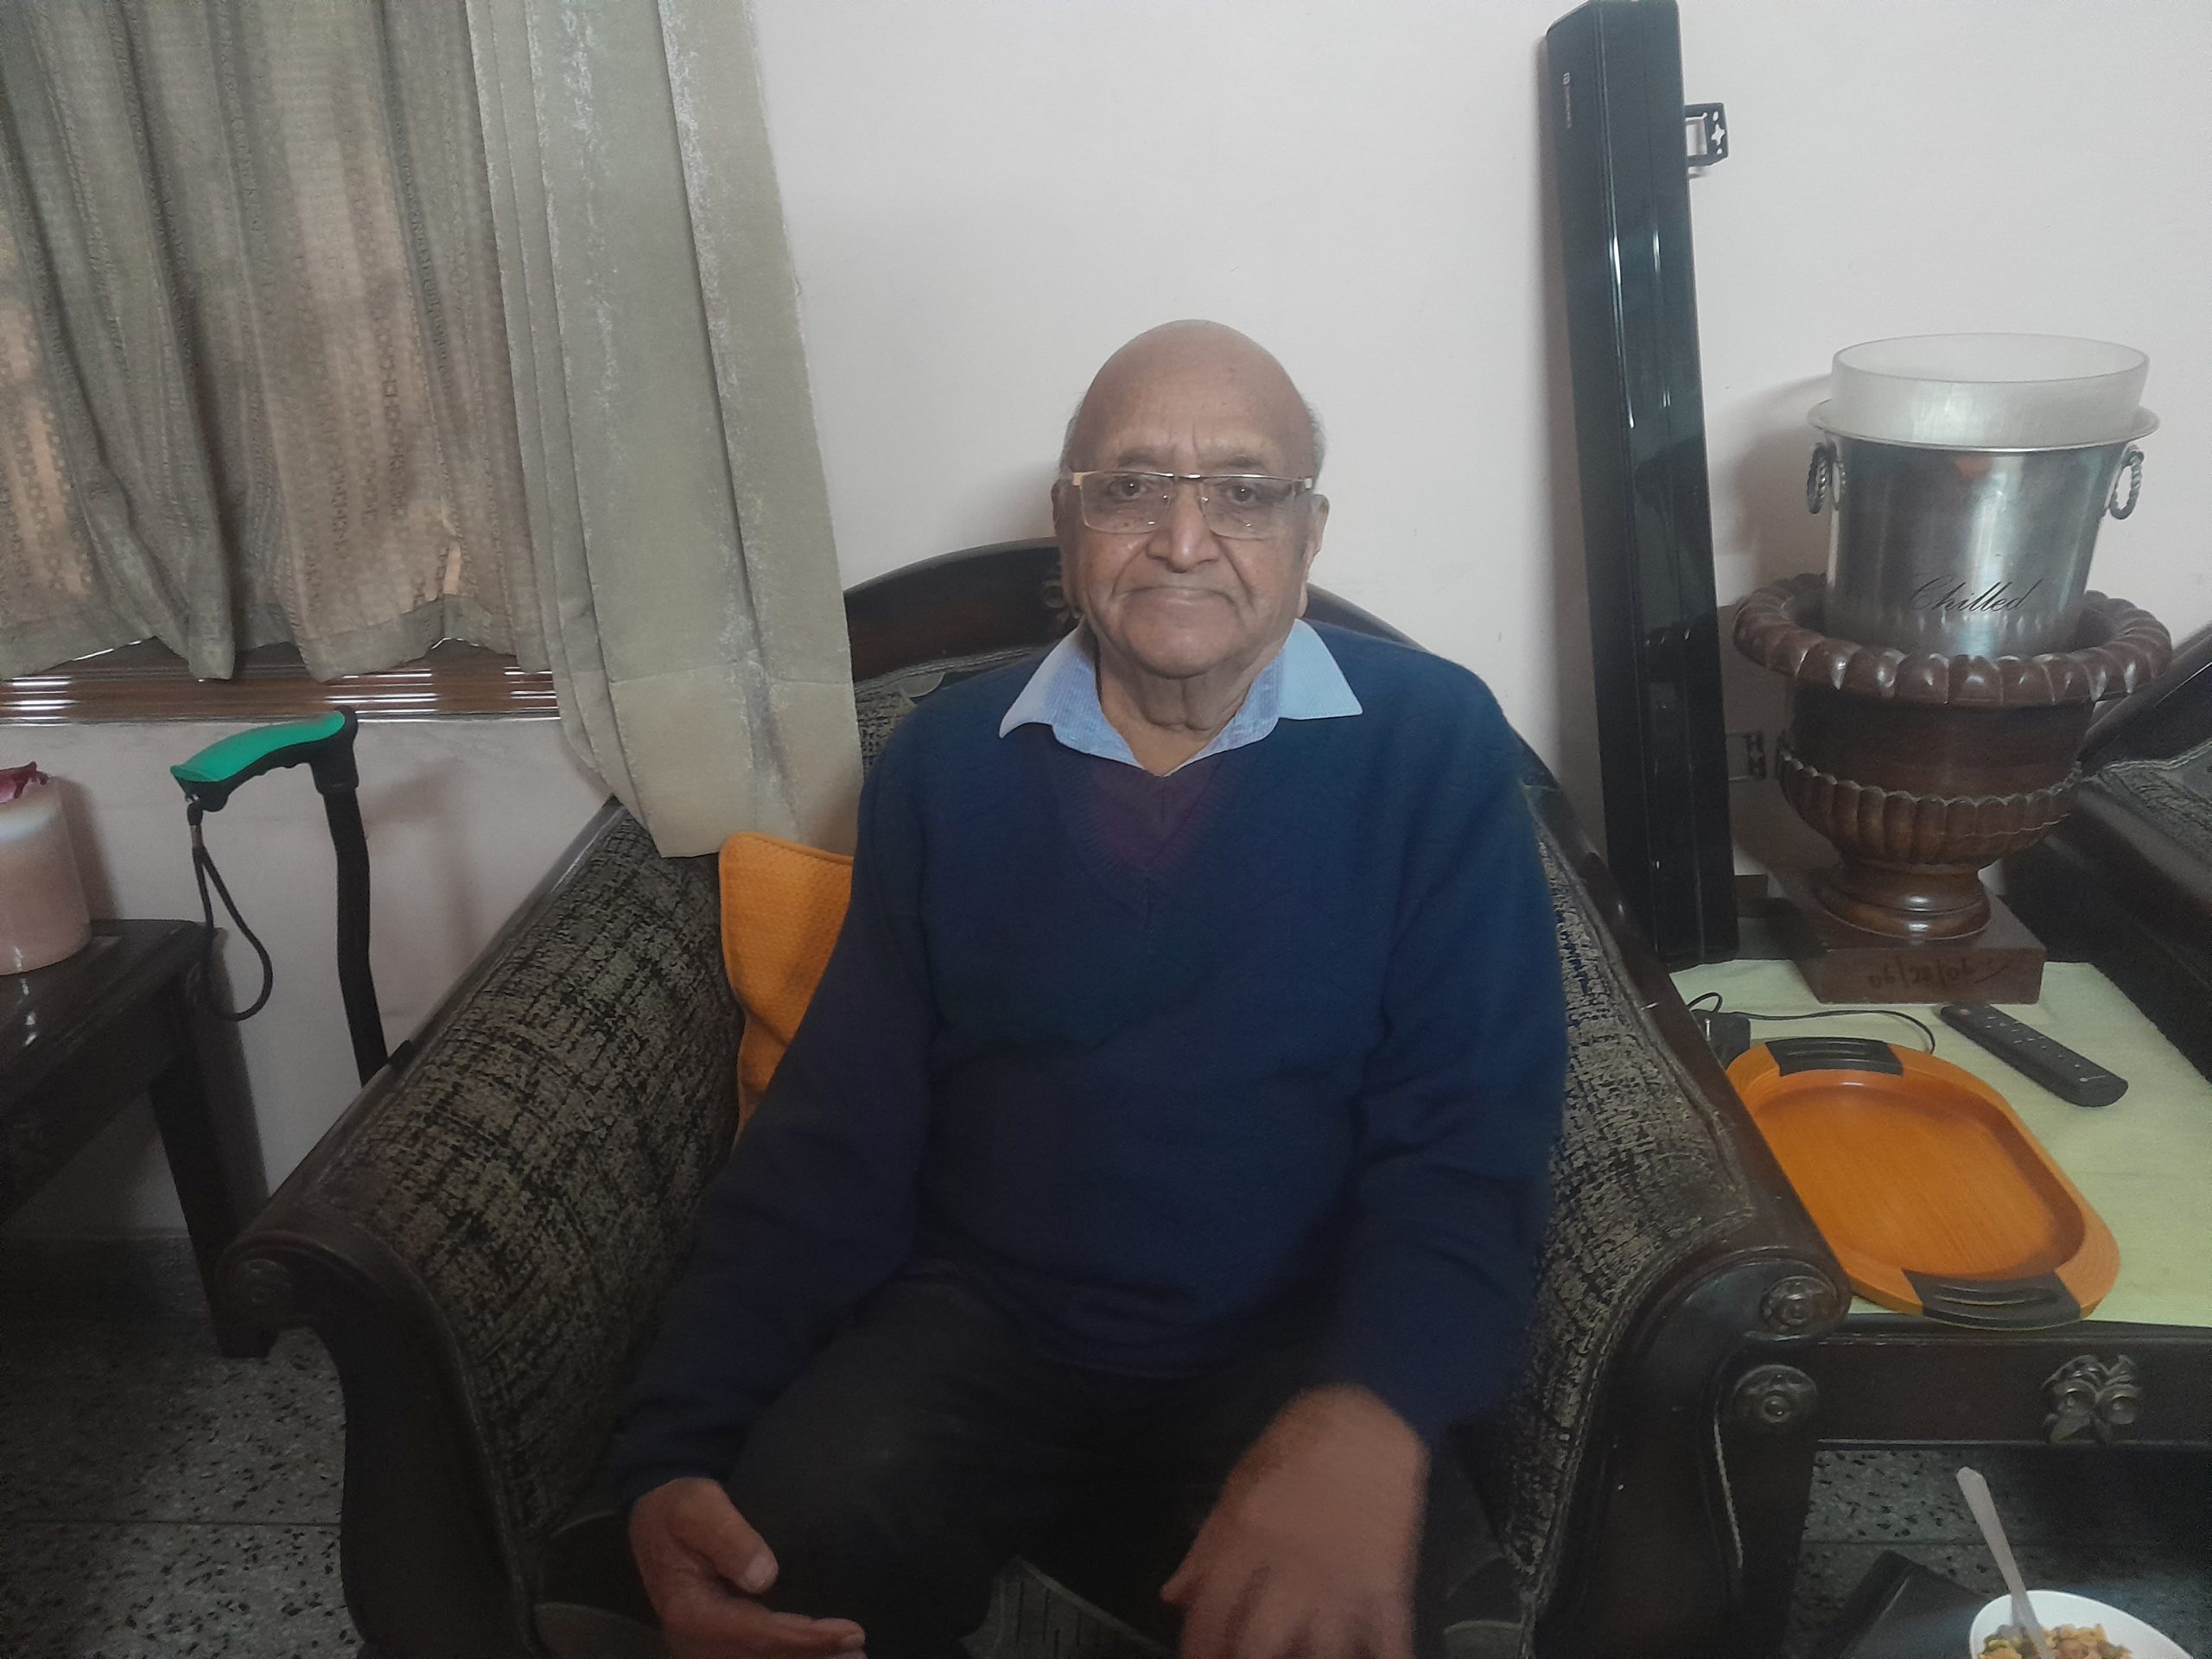 Delhi’s senior citizens’ club offers recreation facilities for the elderly